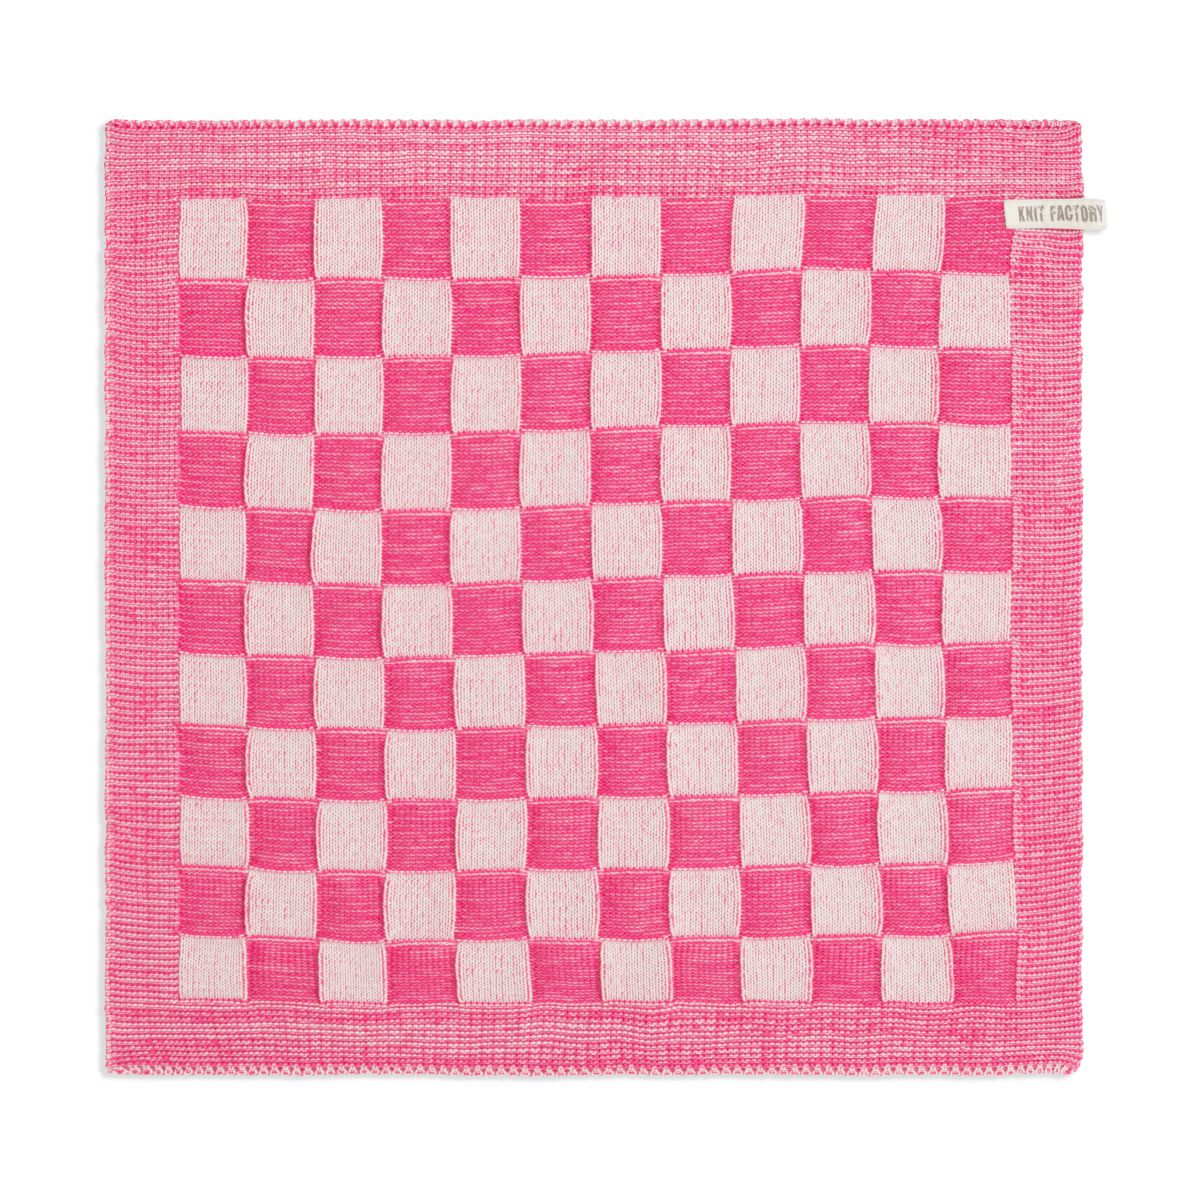 Knit Factory - gebreide keukendoek geruit - roze/ecru